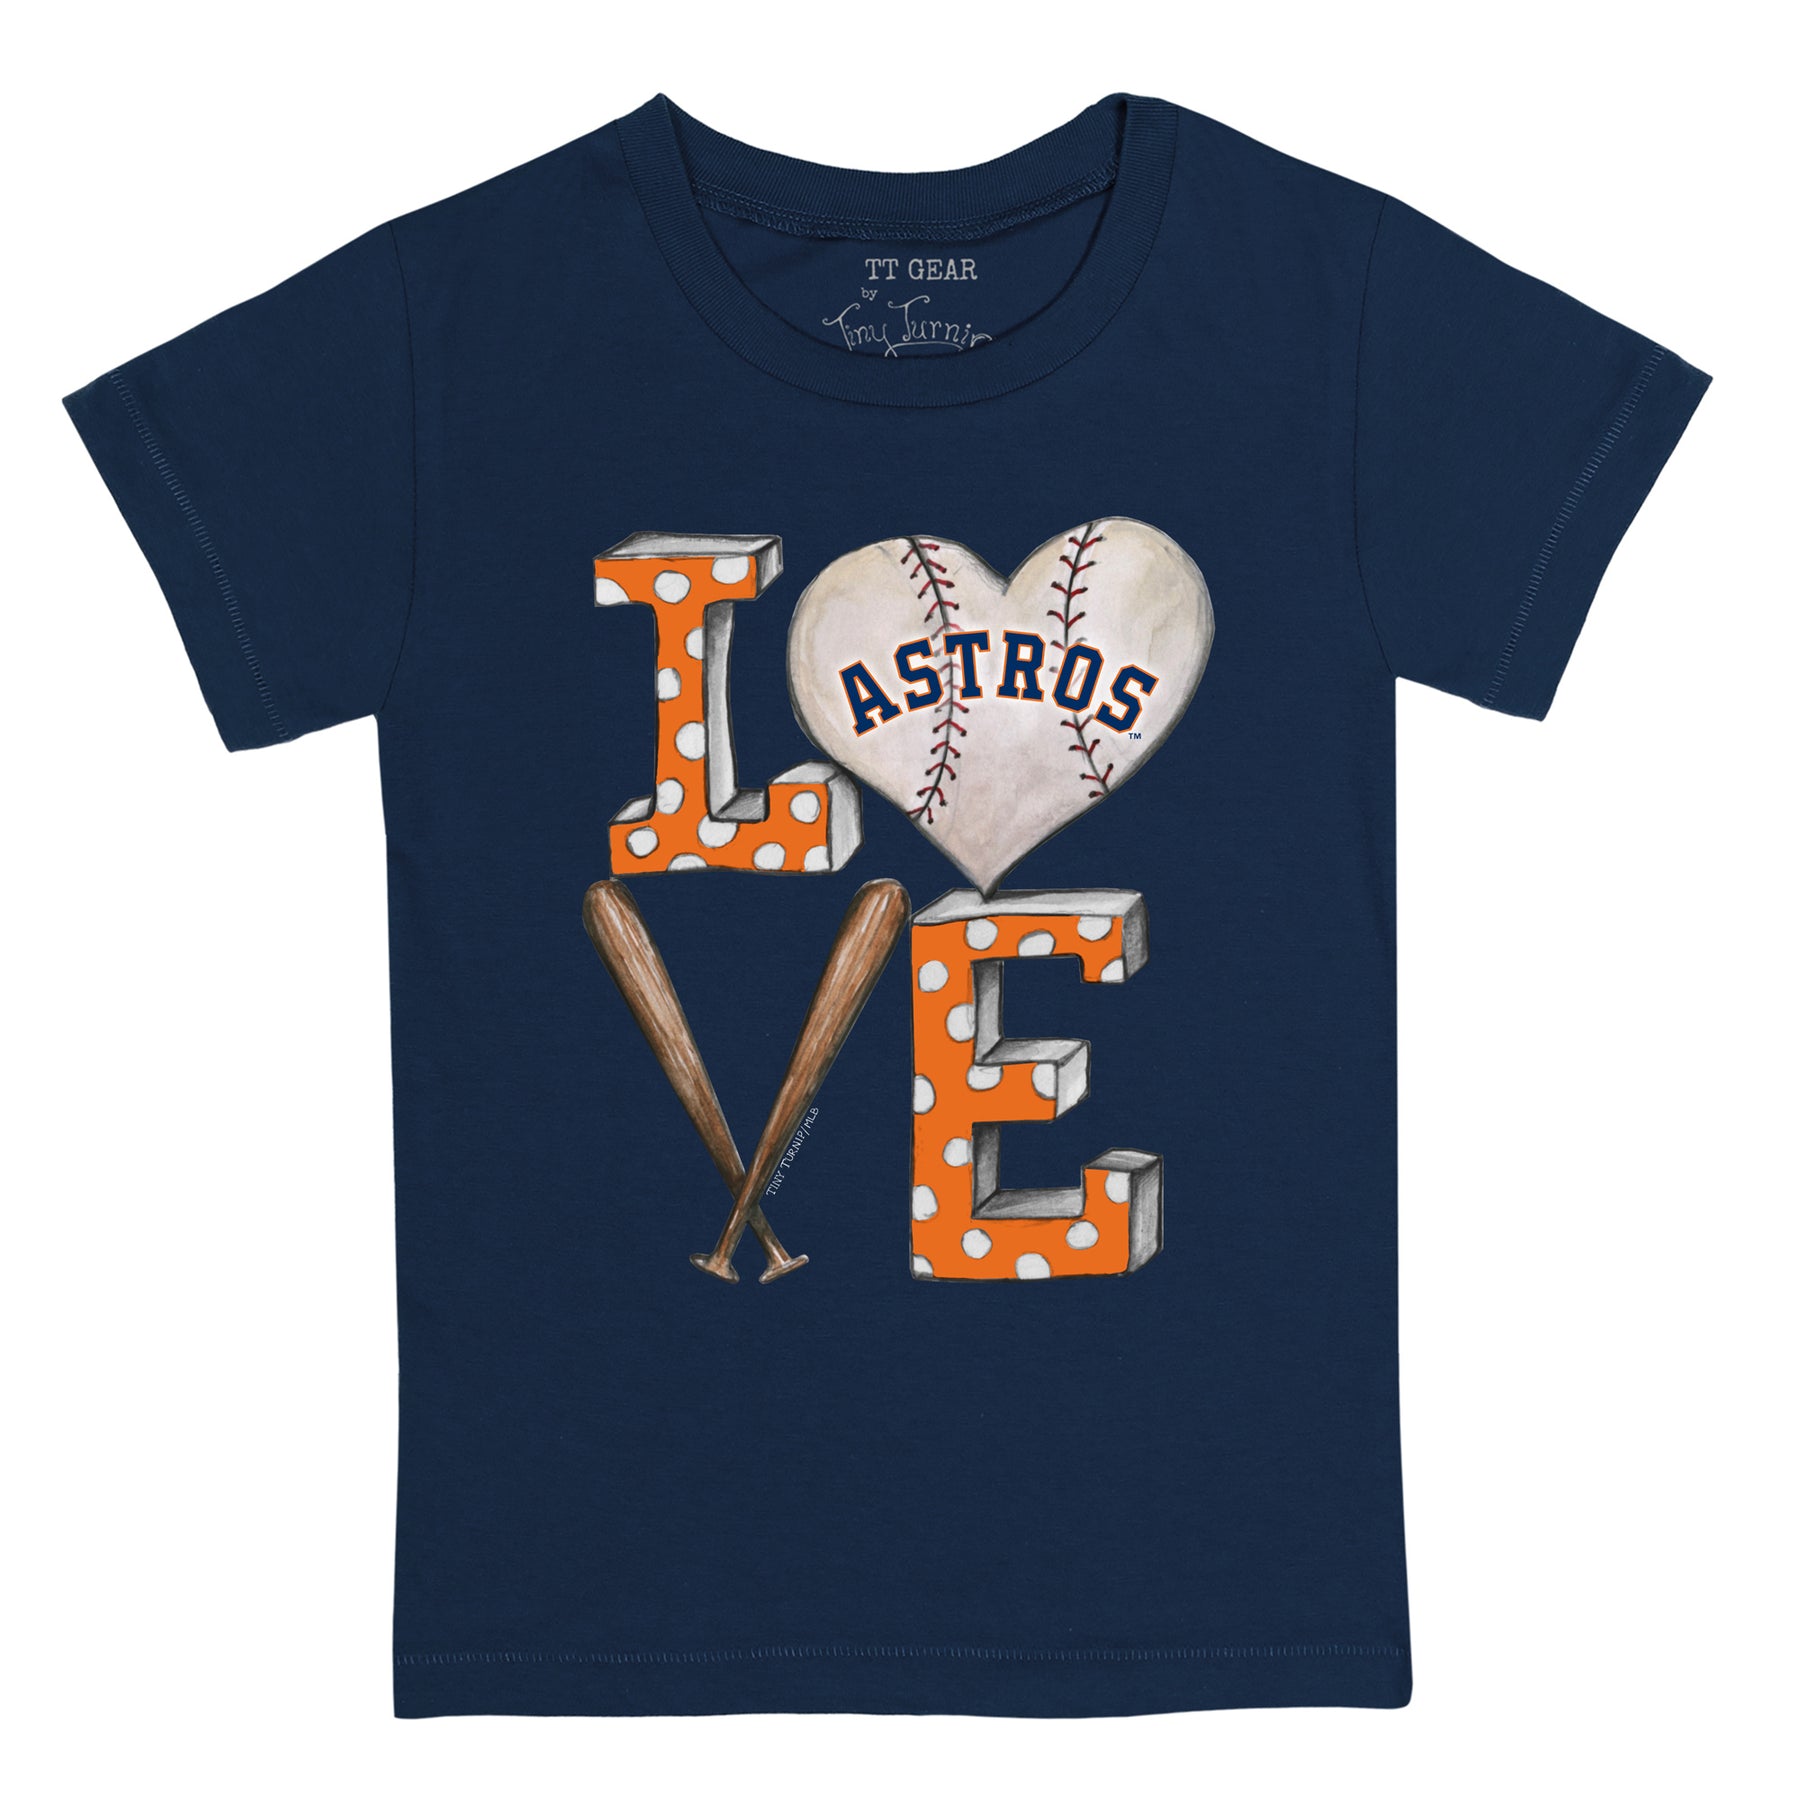 houston astros baseball shirt